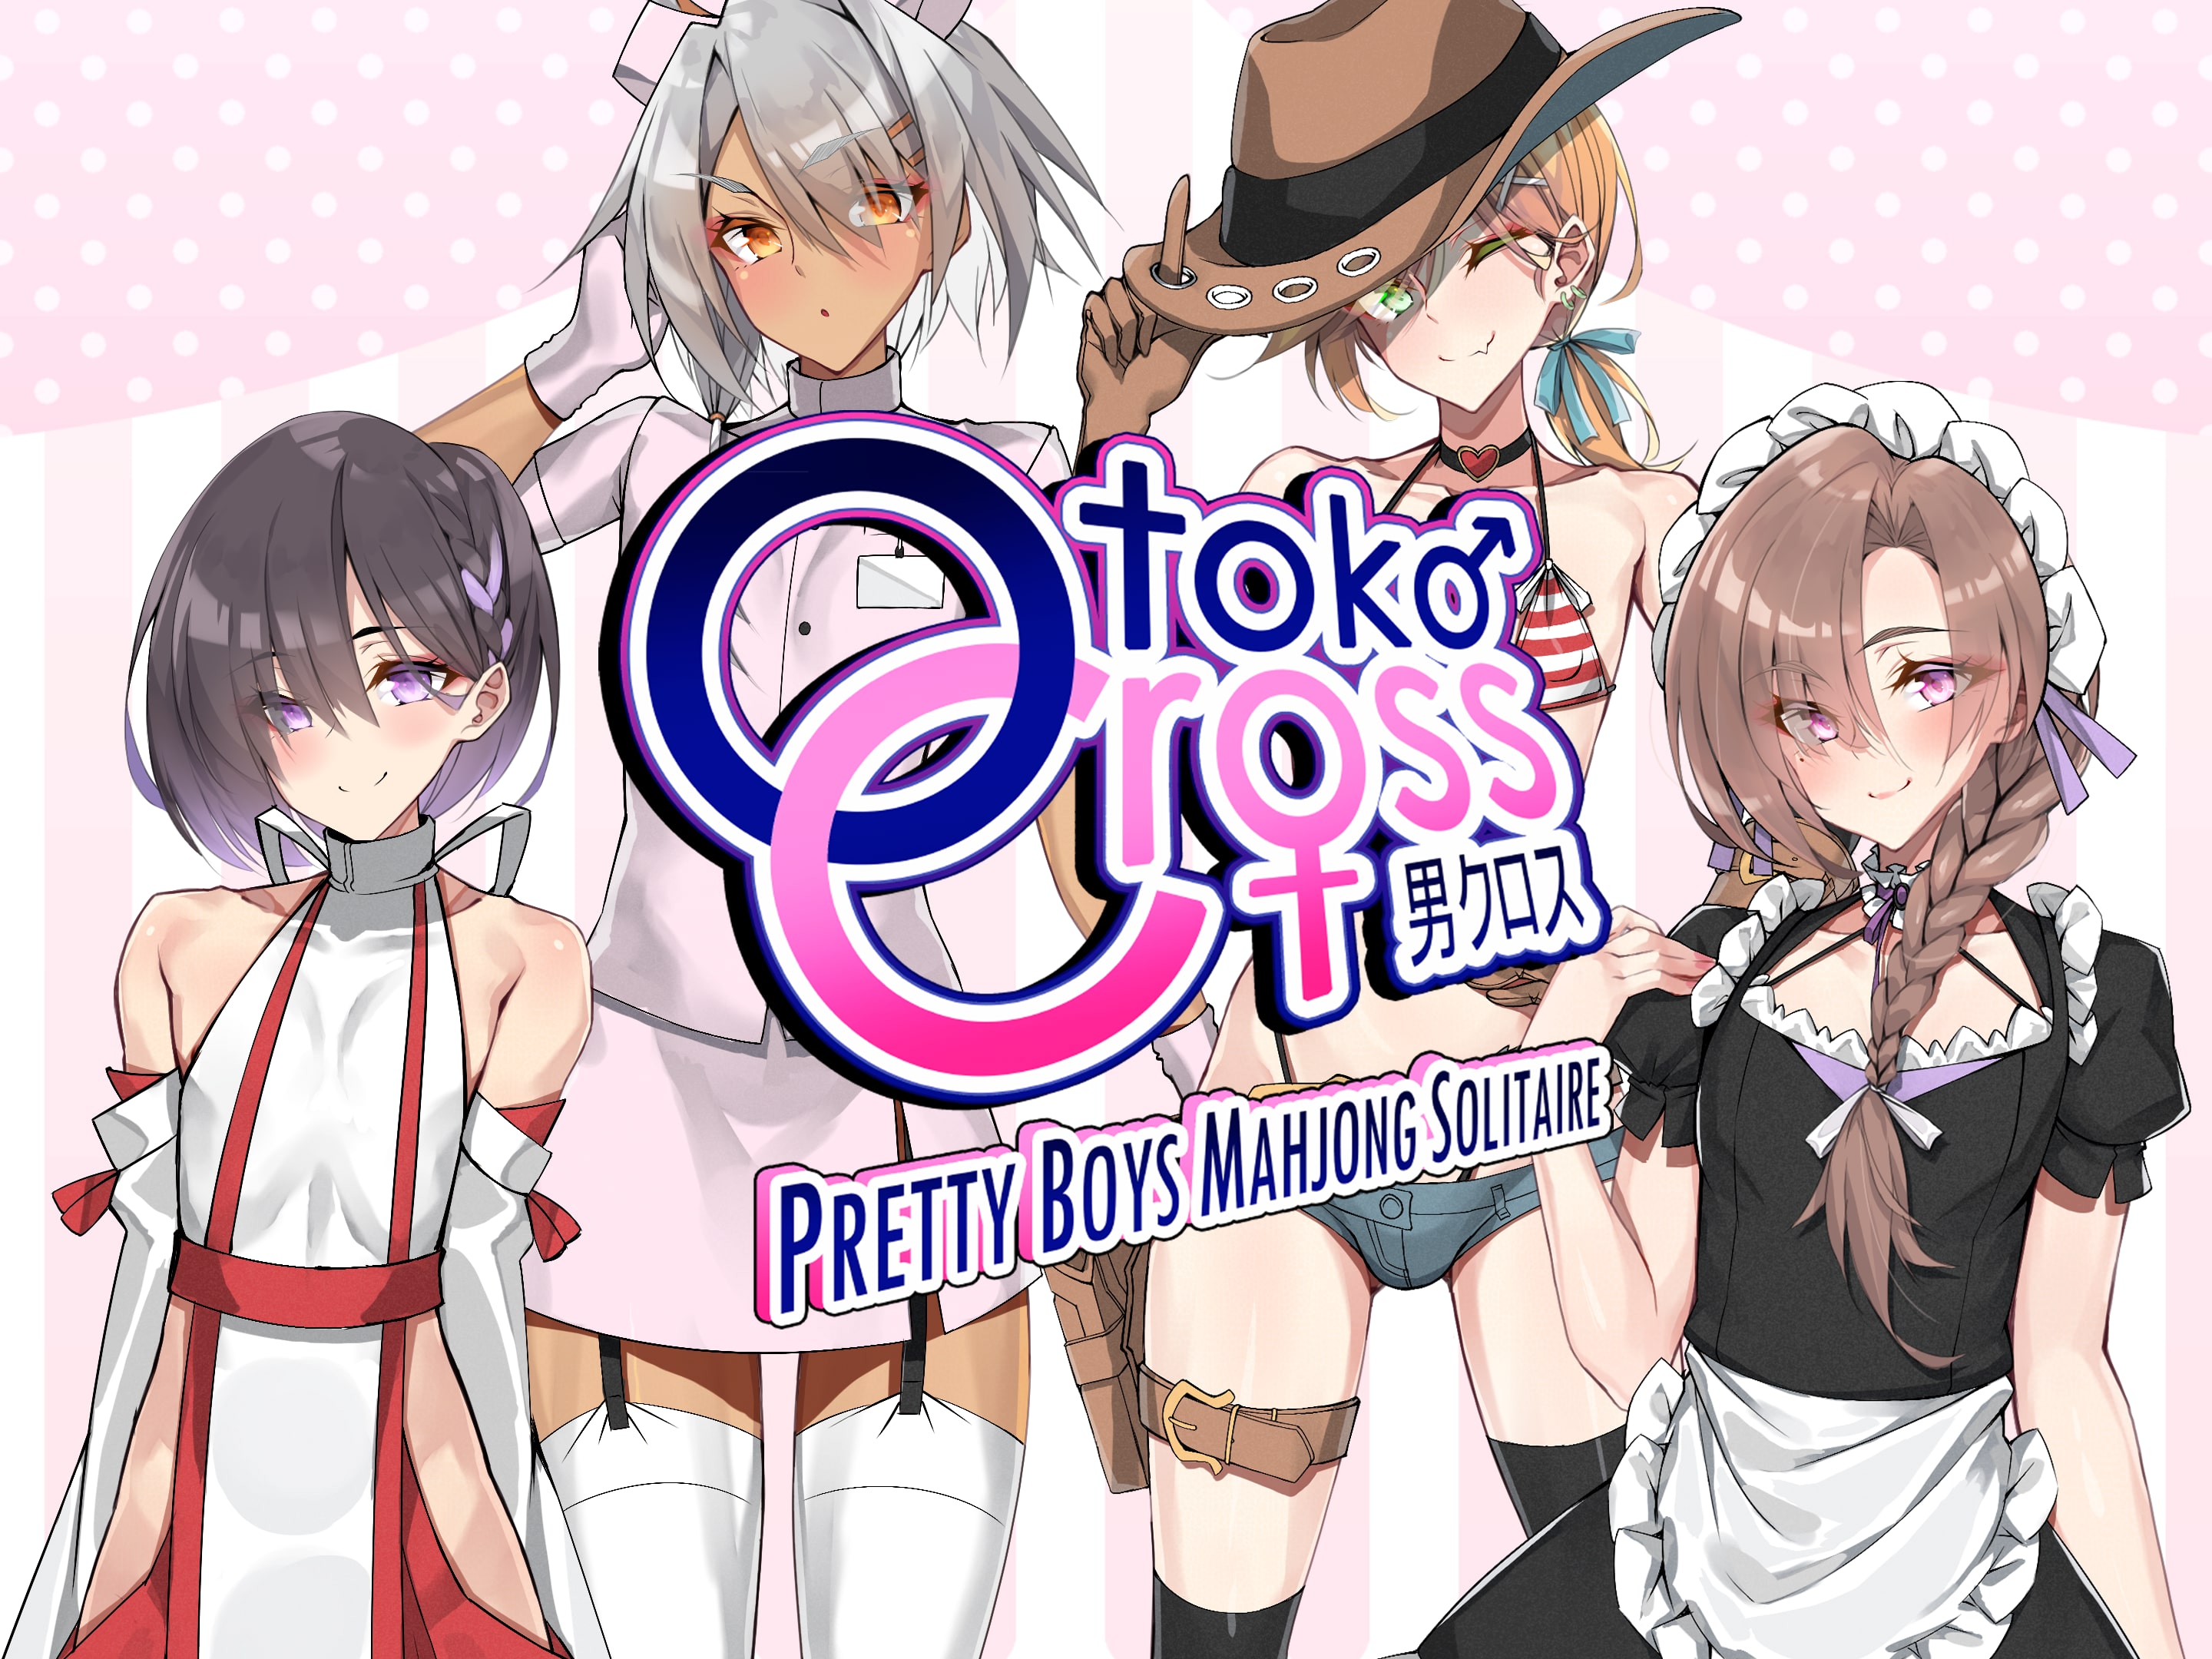 Comprar Otoko Cross: Pretty Boys Mahjong Solitaire PS4 & PS5 – Jogo  completo – Aluguel com desconto - Loca Play